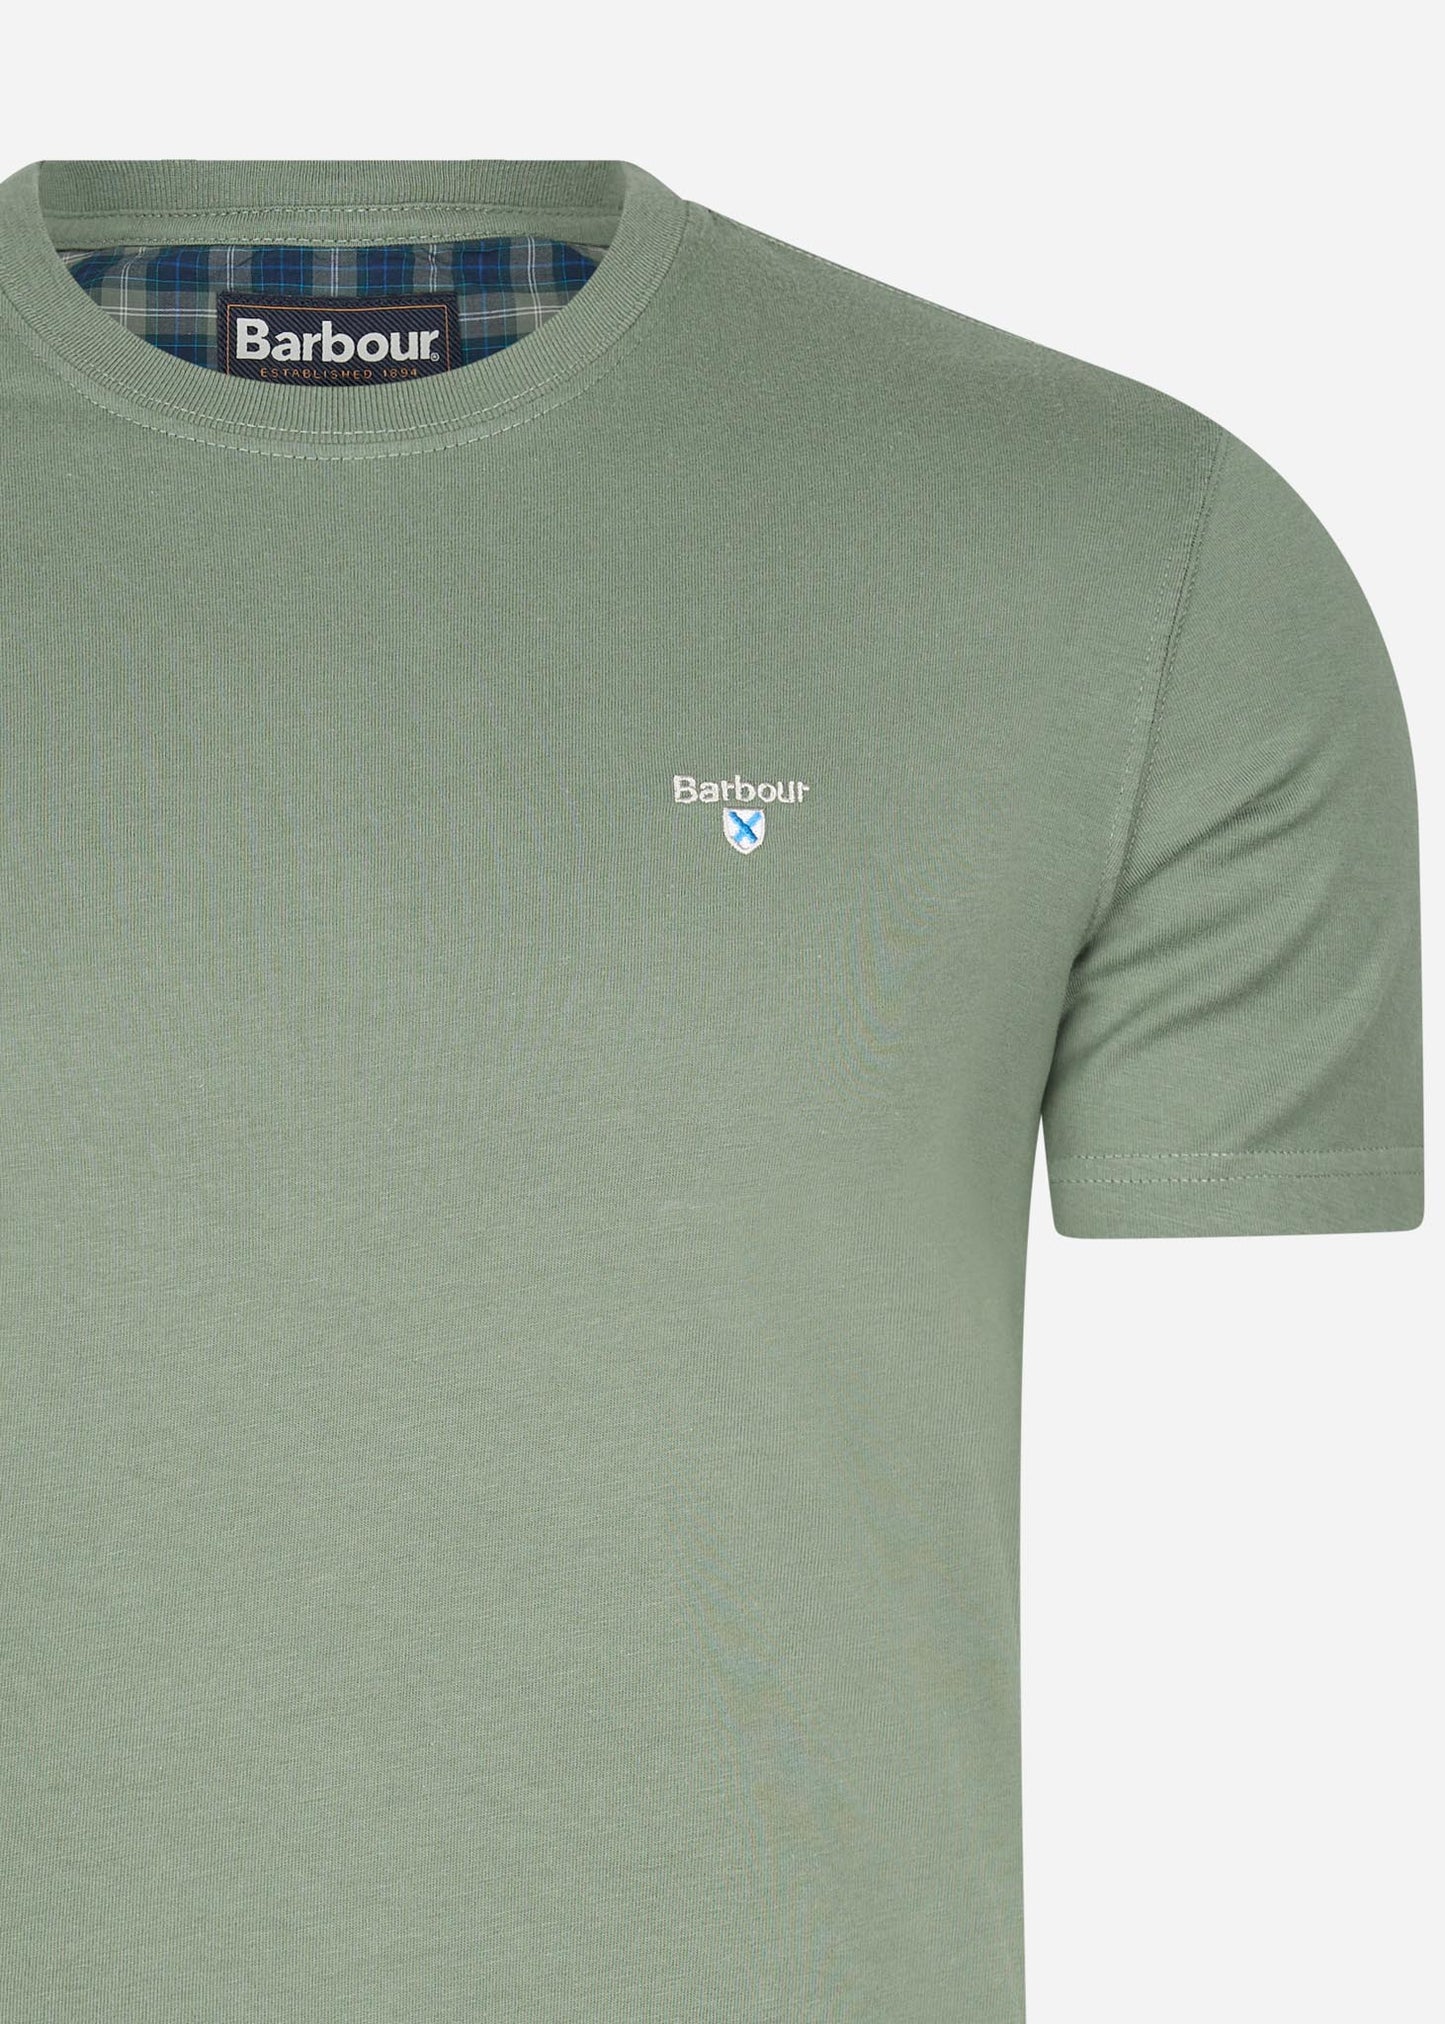 Barbour T-shirts  Tartan sports tee - agave green 